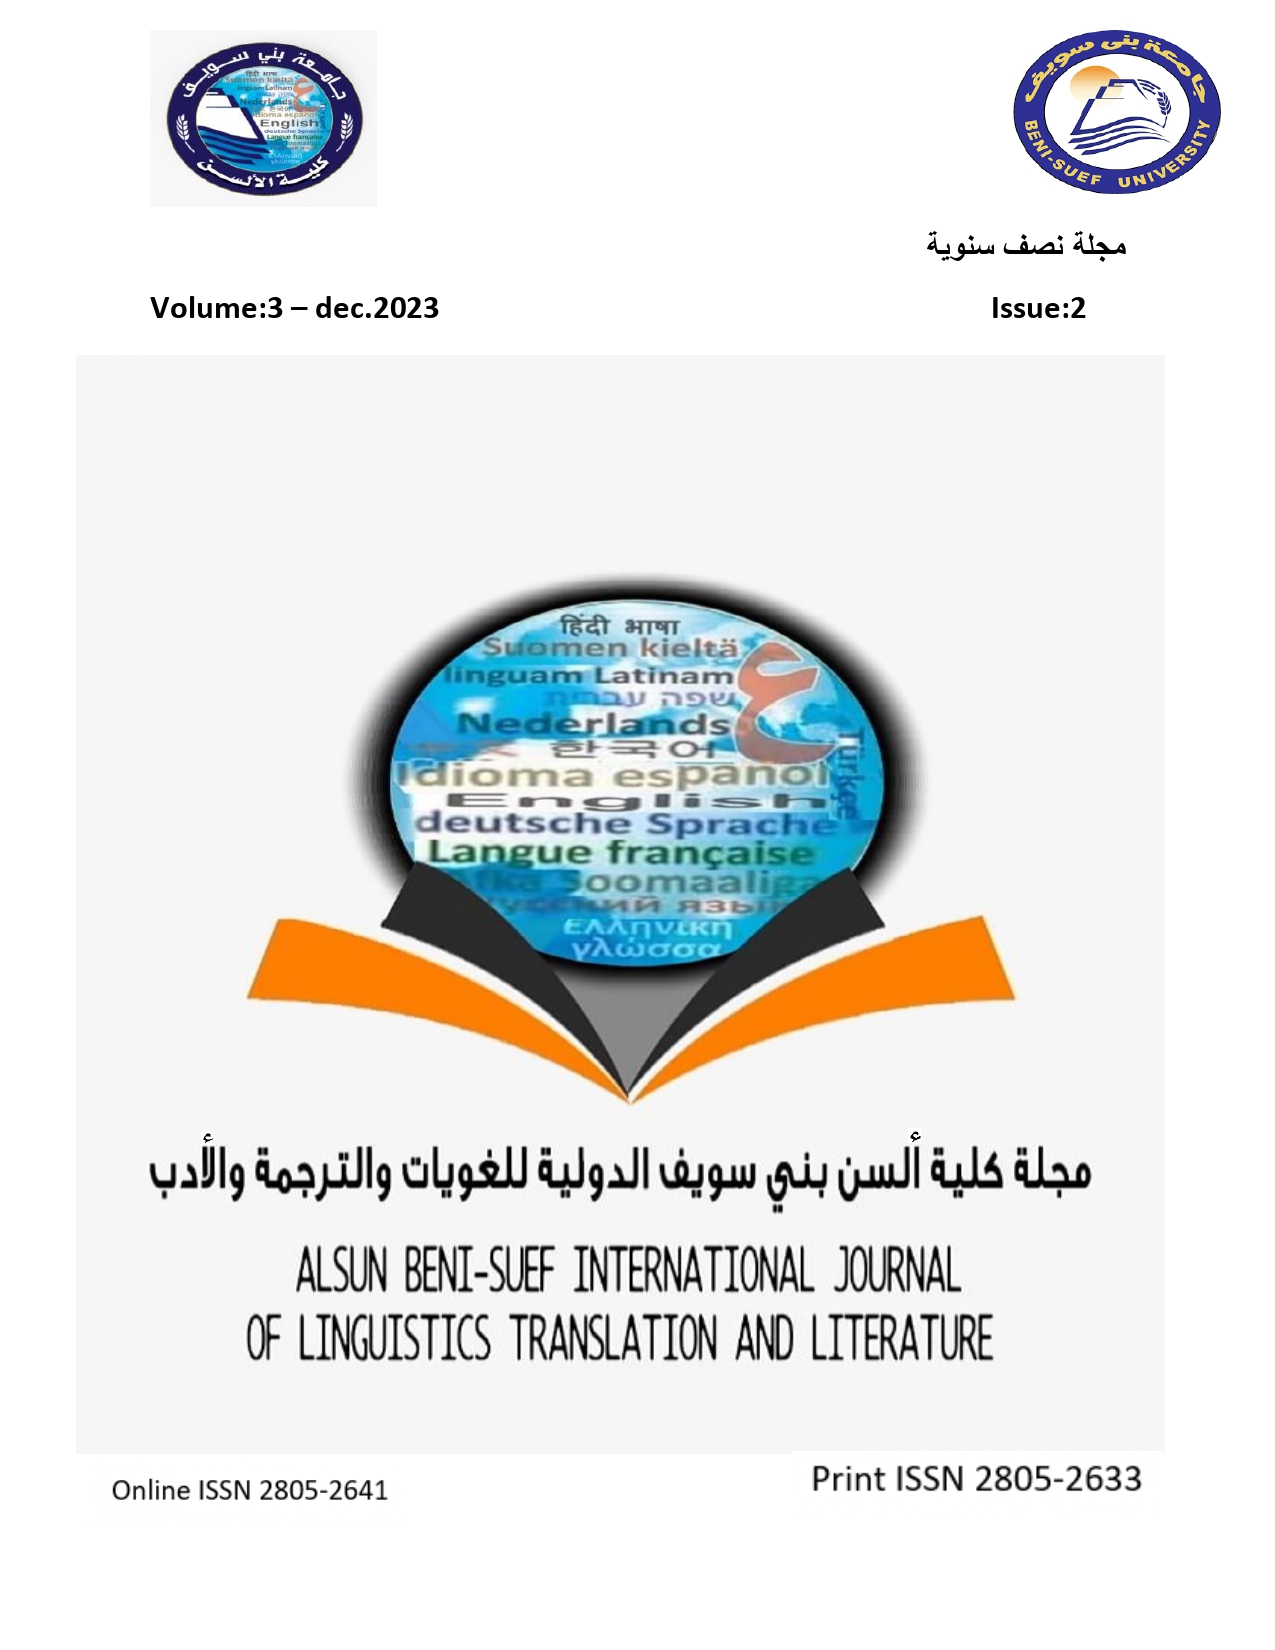 Alsun Beni-Suef International Journal of Linguistics Translation and Literature